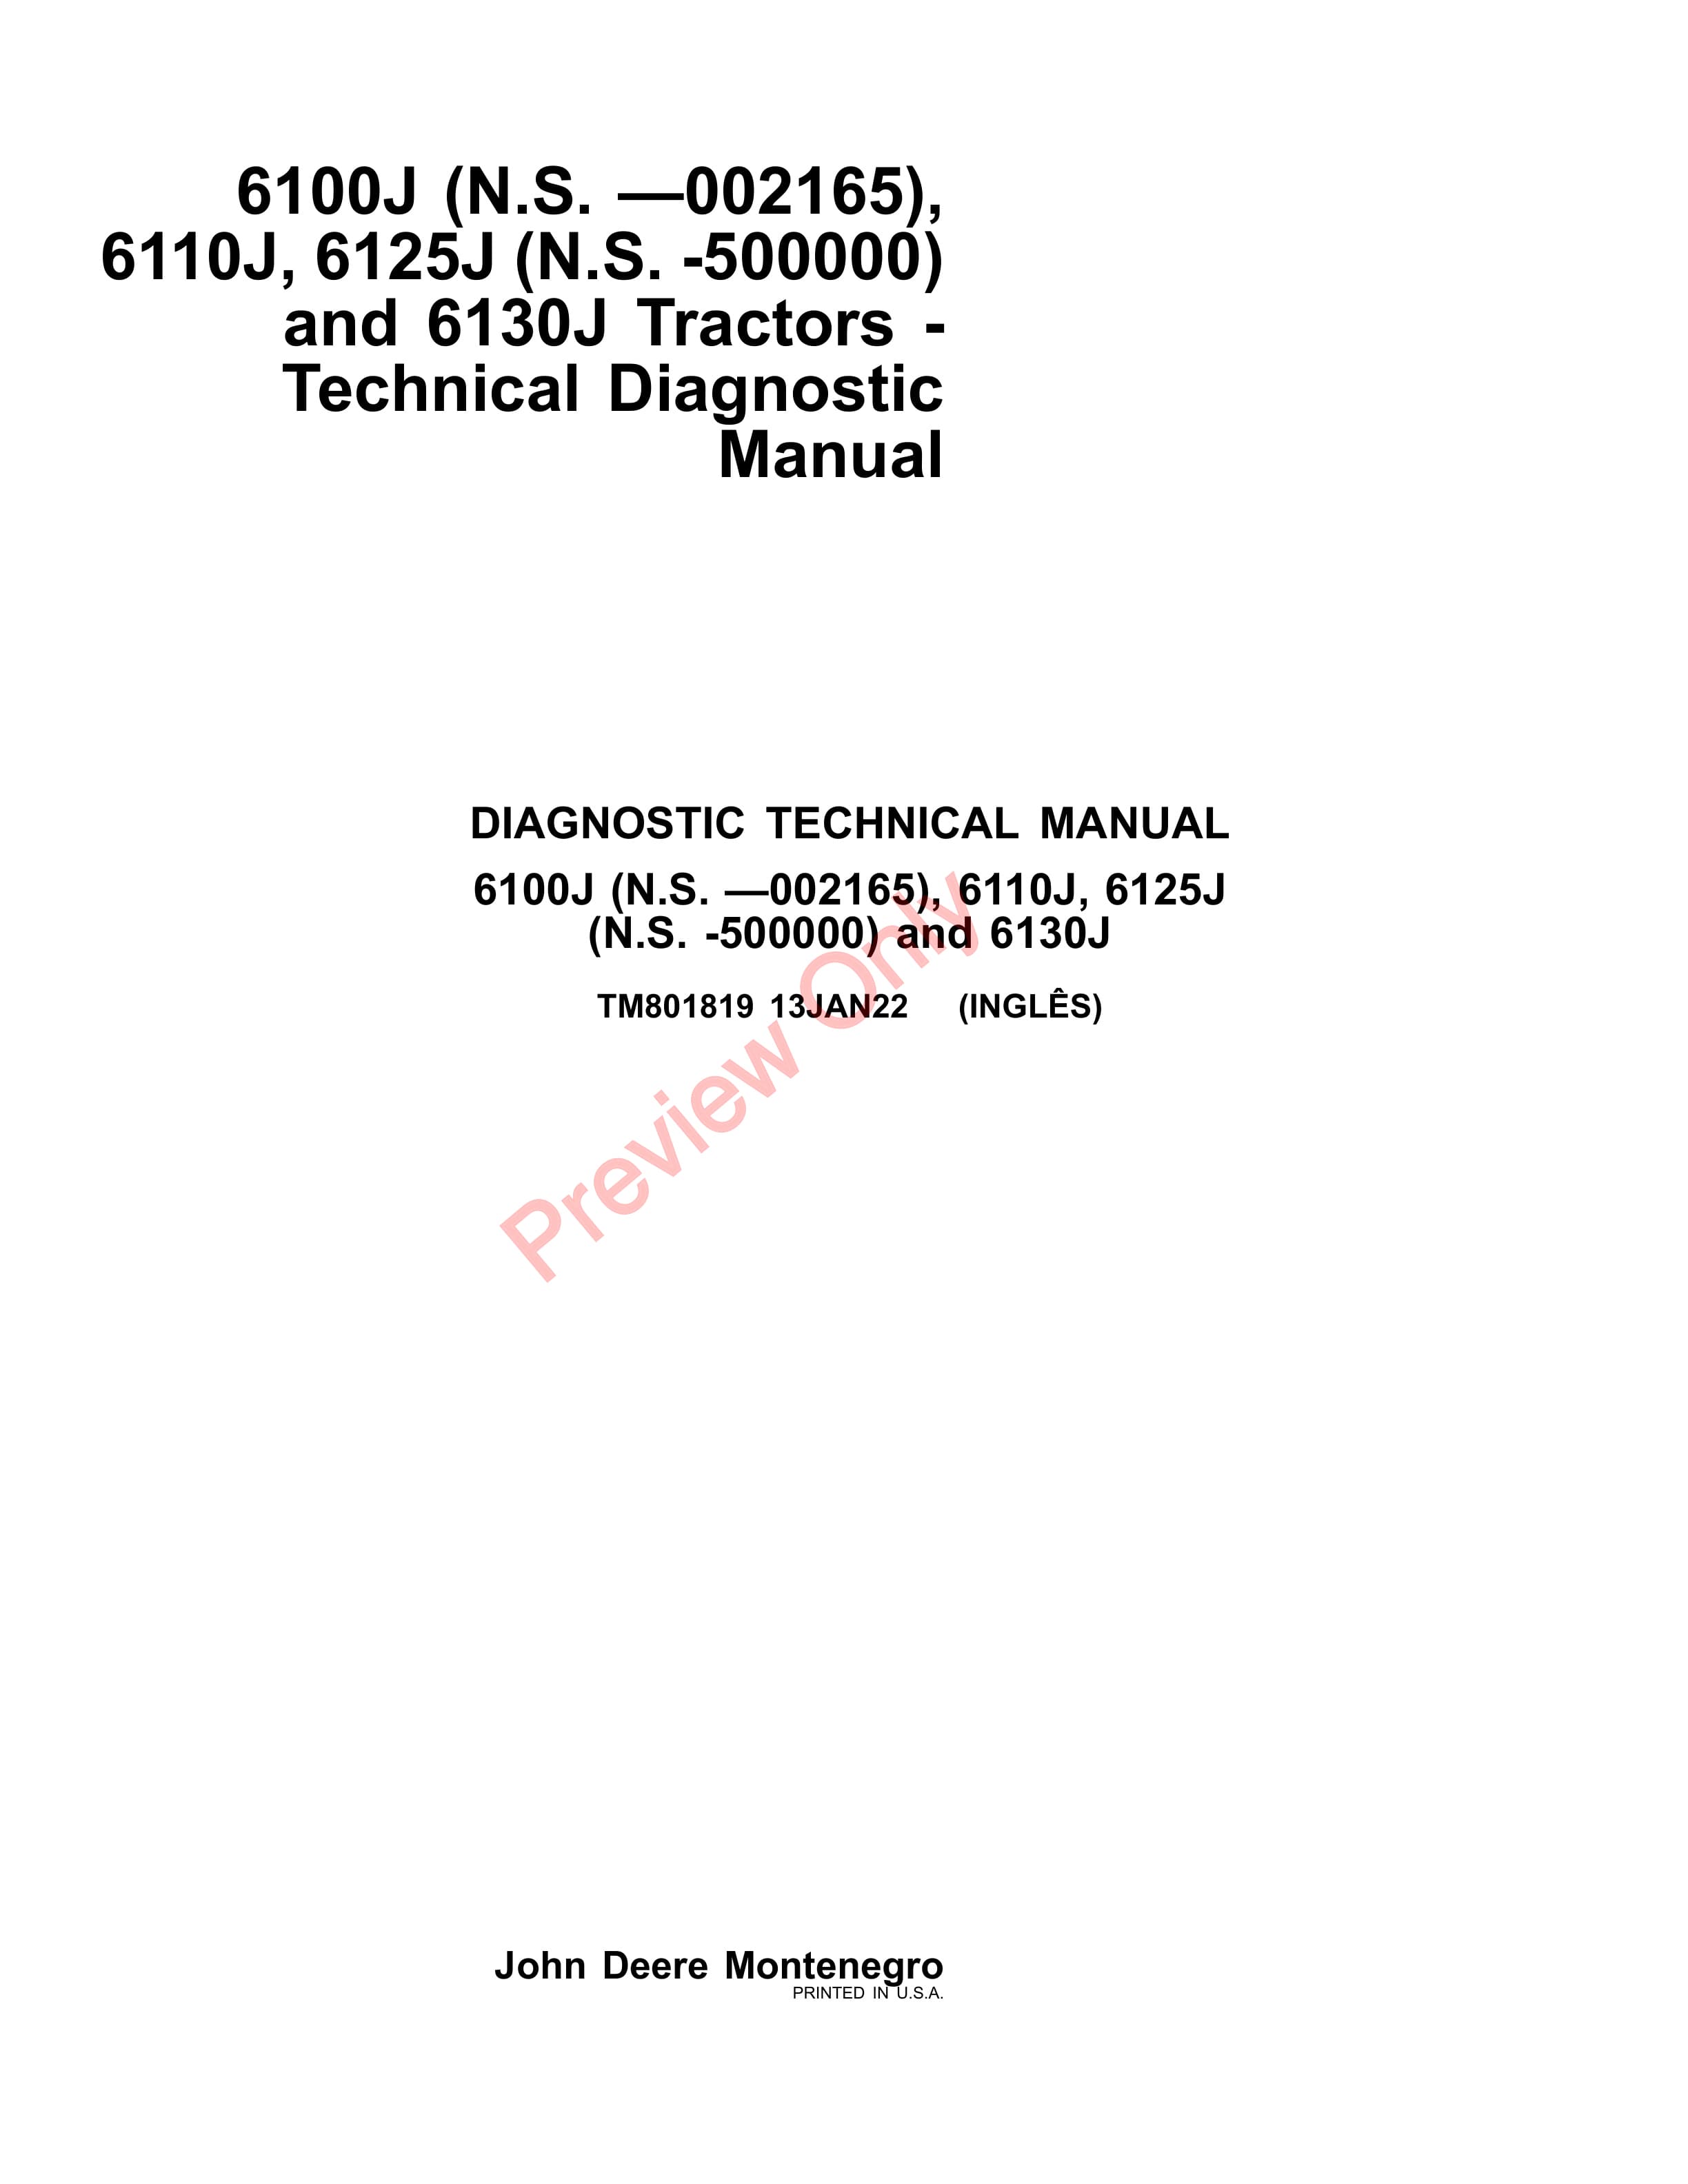 John Deere 6100J (-002165), 6110J (000001 Diagnostic Technical Manual TM801819 13JAN22-1